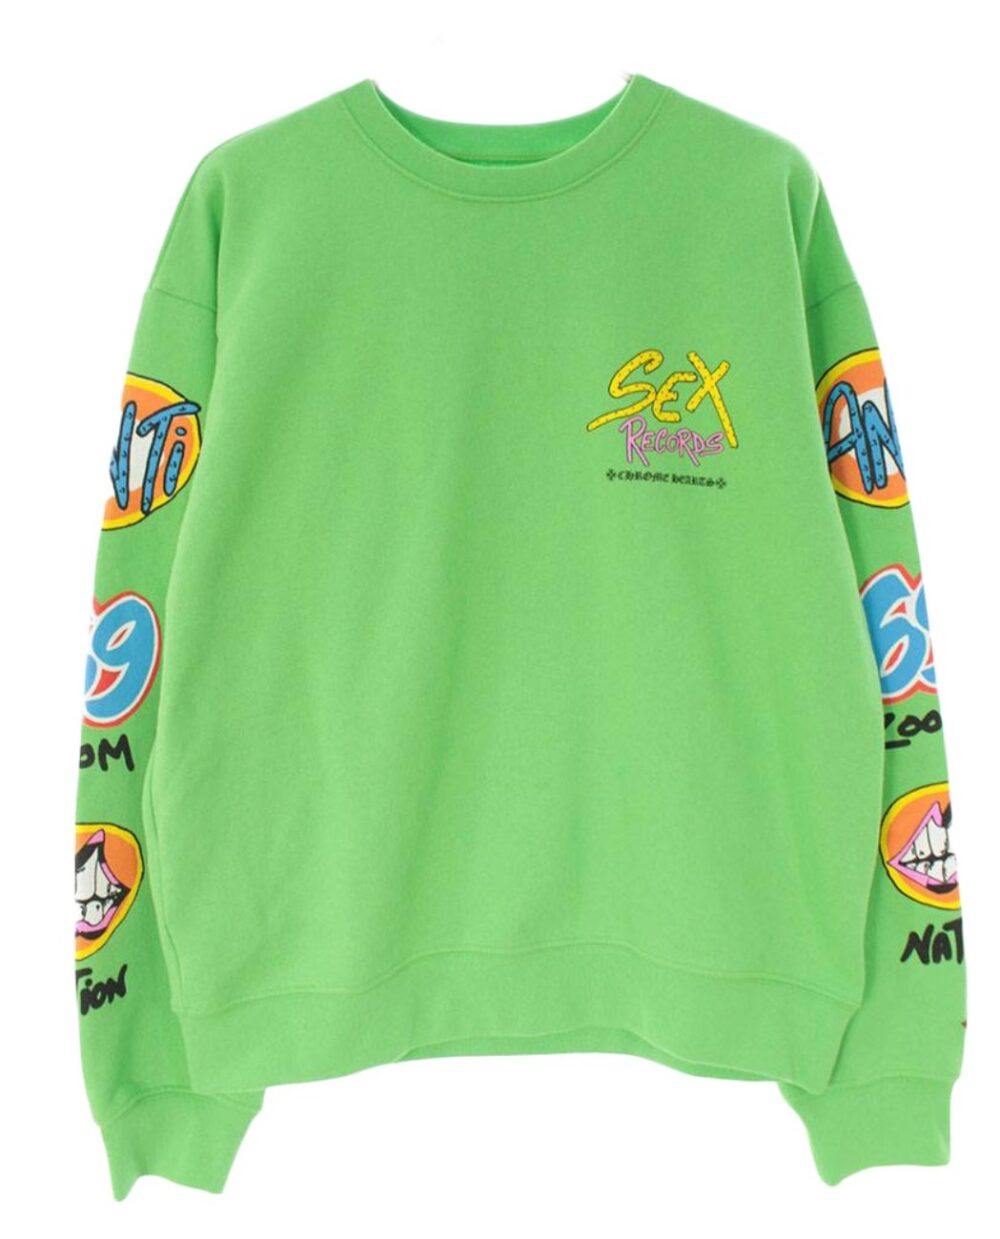 Chrome Hearts Matty Boy Sex Record Sweatshirt – Green